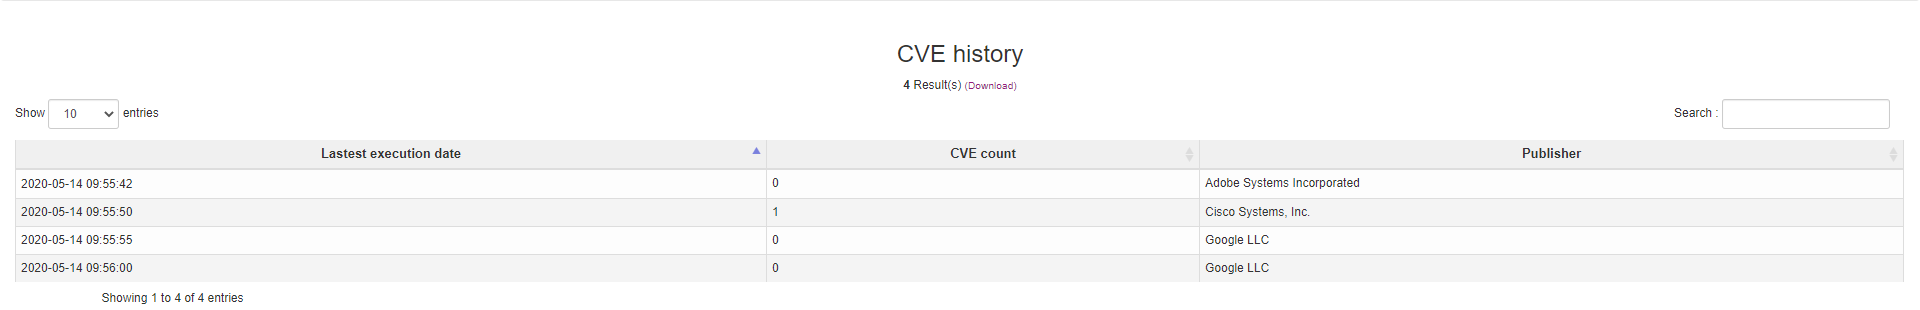 cve-search history